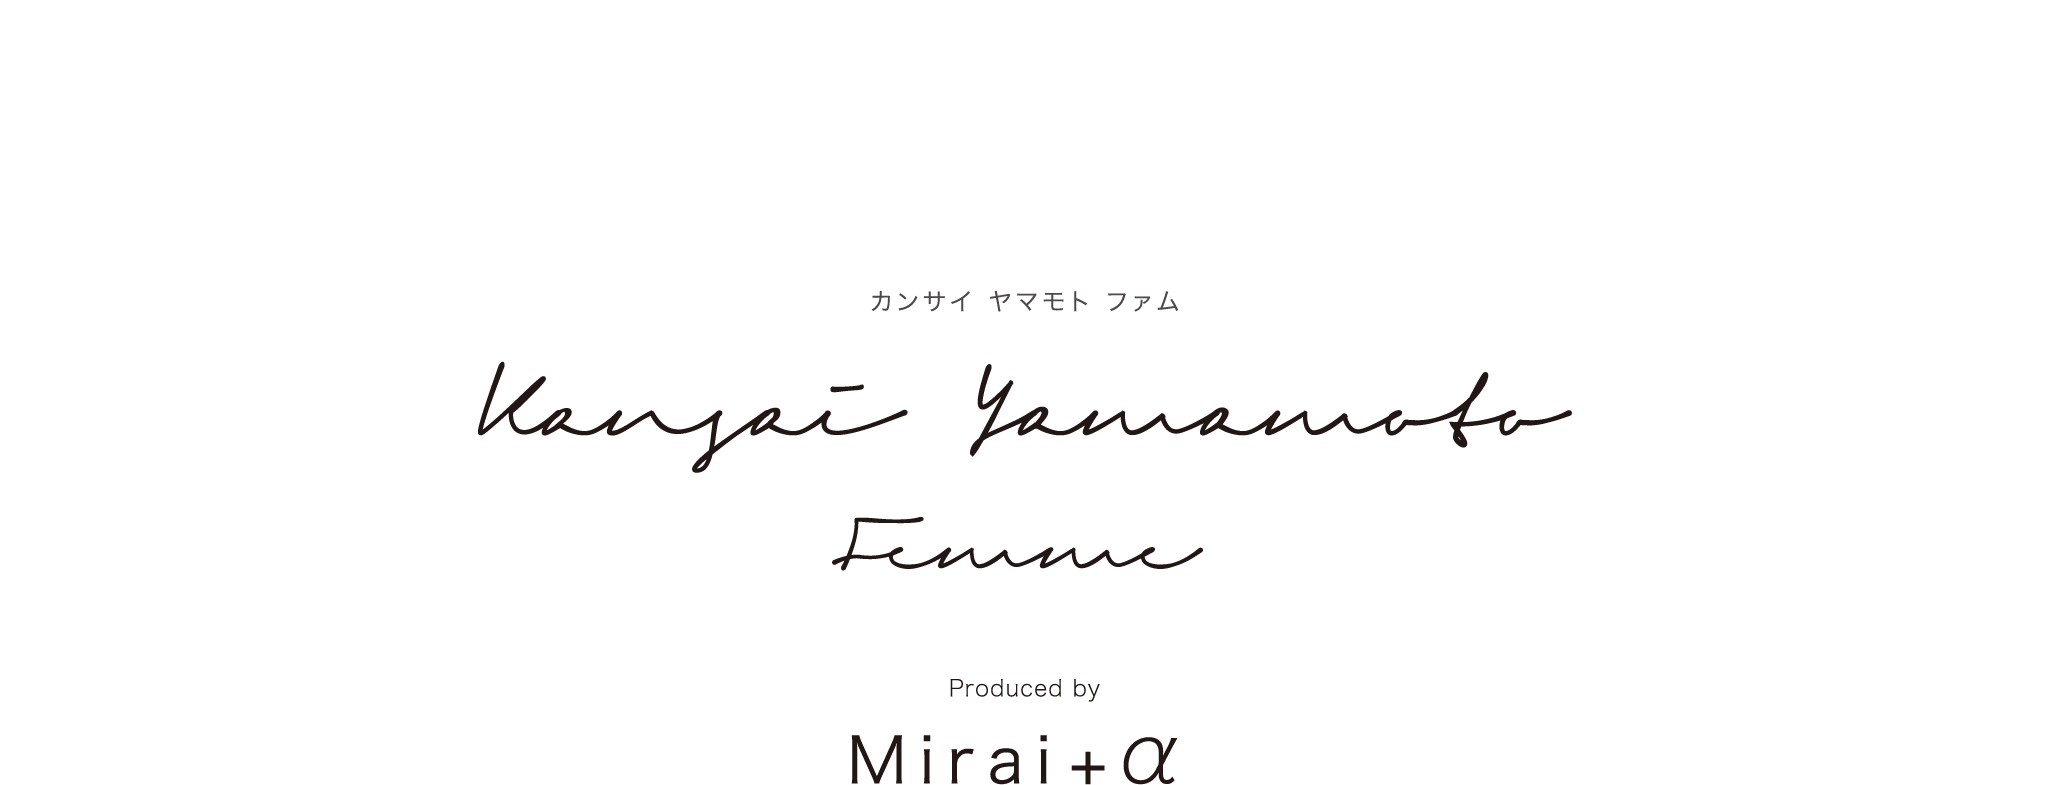 KANSAI YAMAMOTO FEMME　カンサイヤマモトファム Produced by Mirai+α